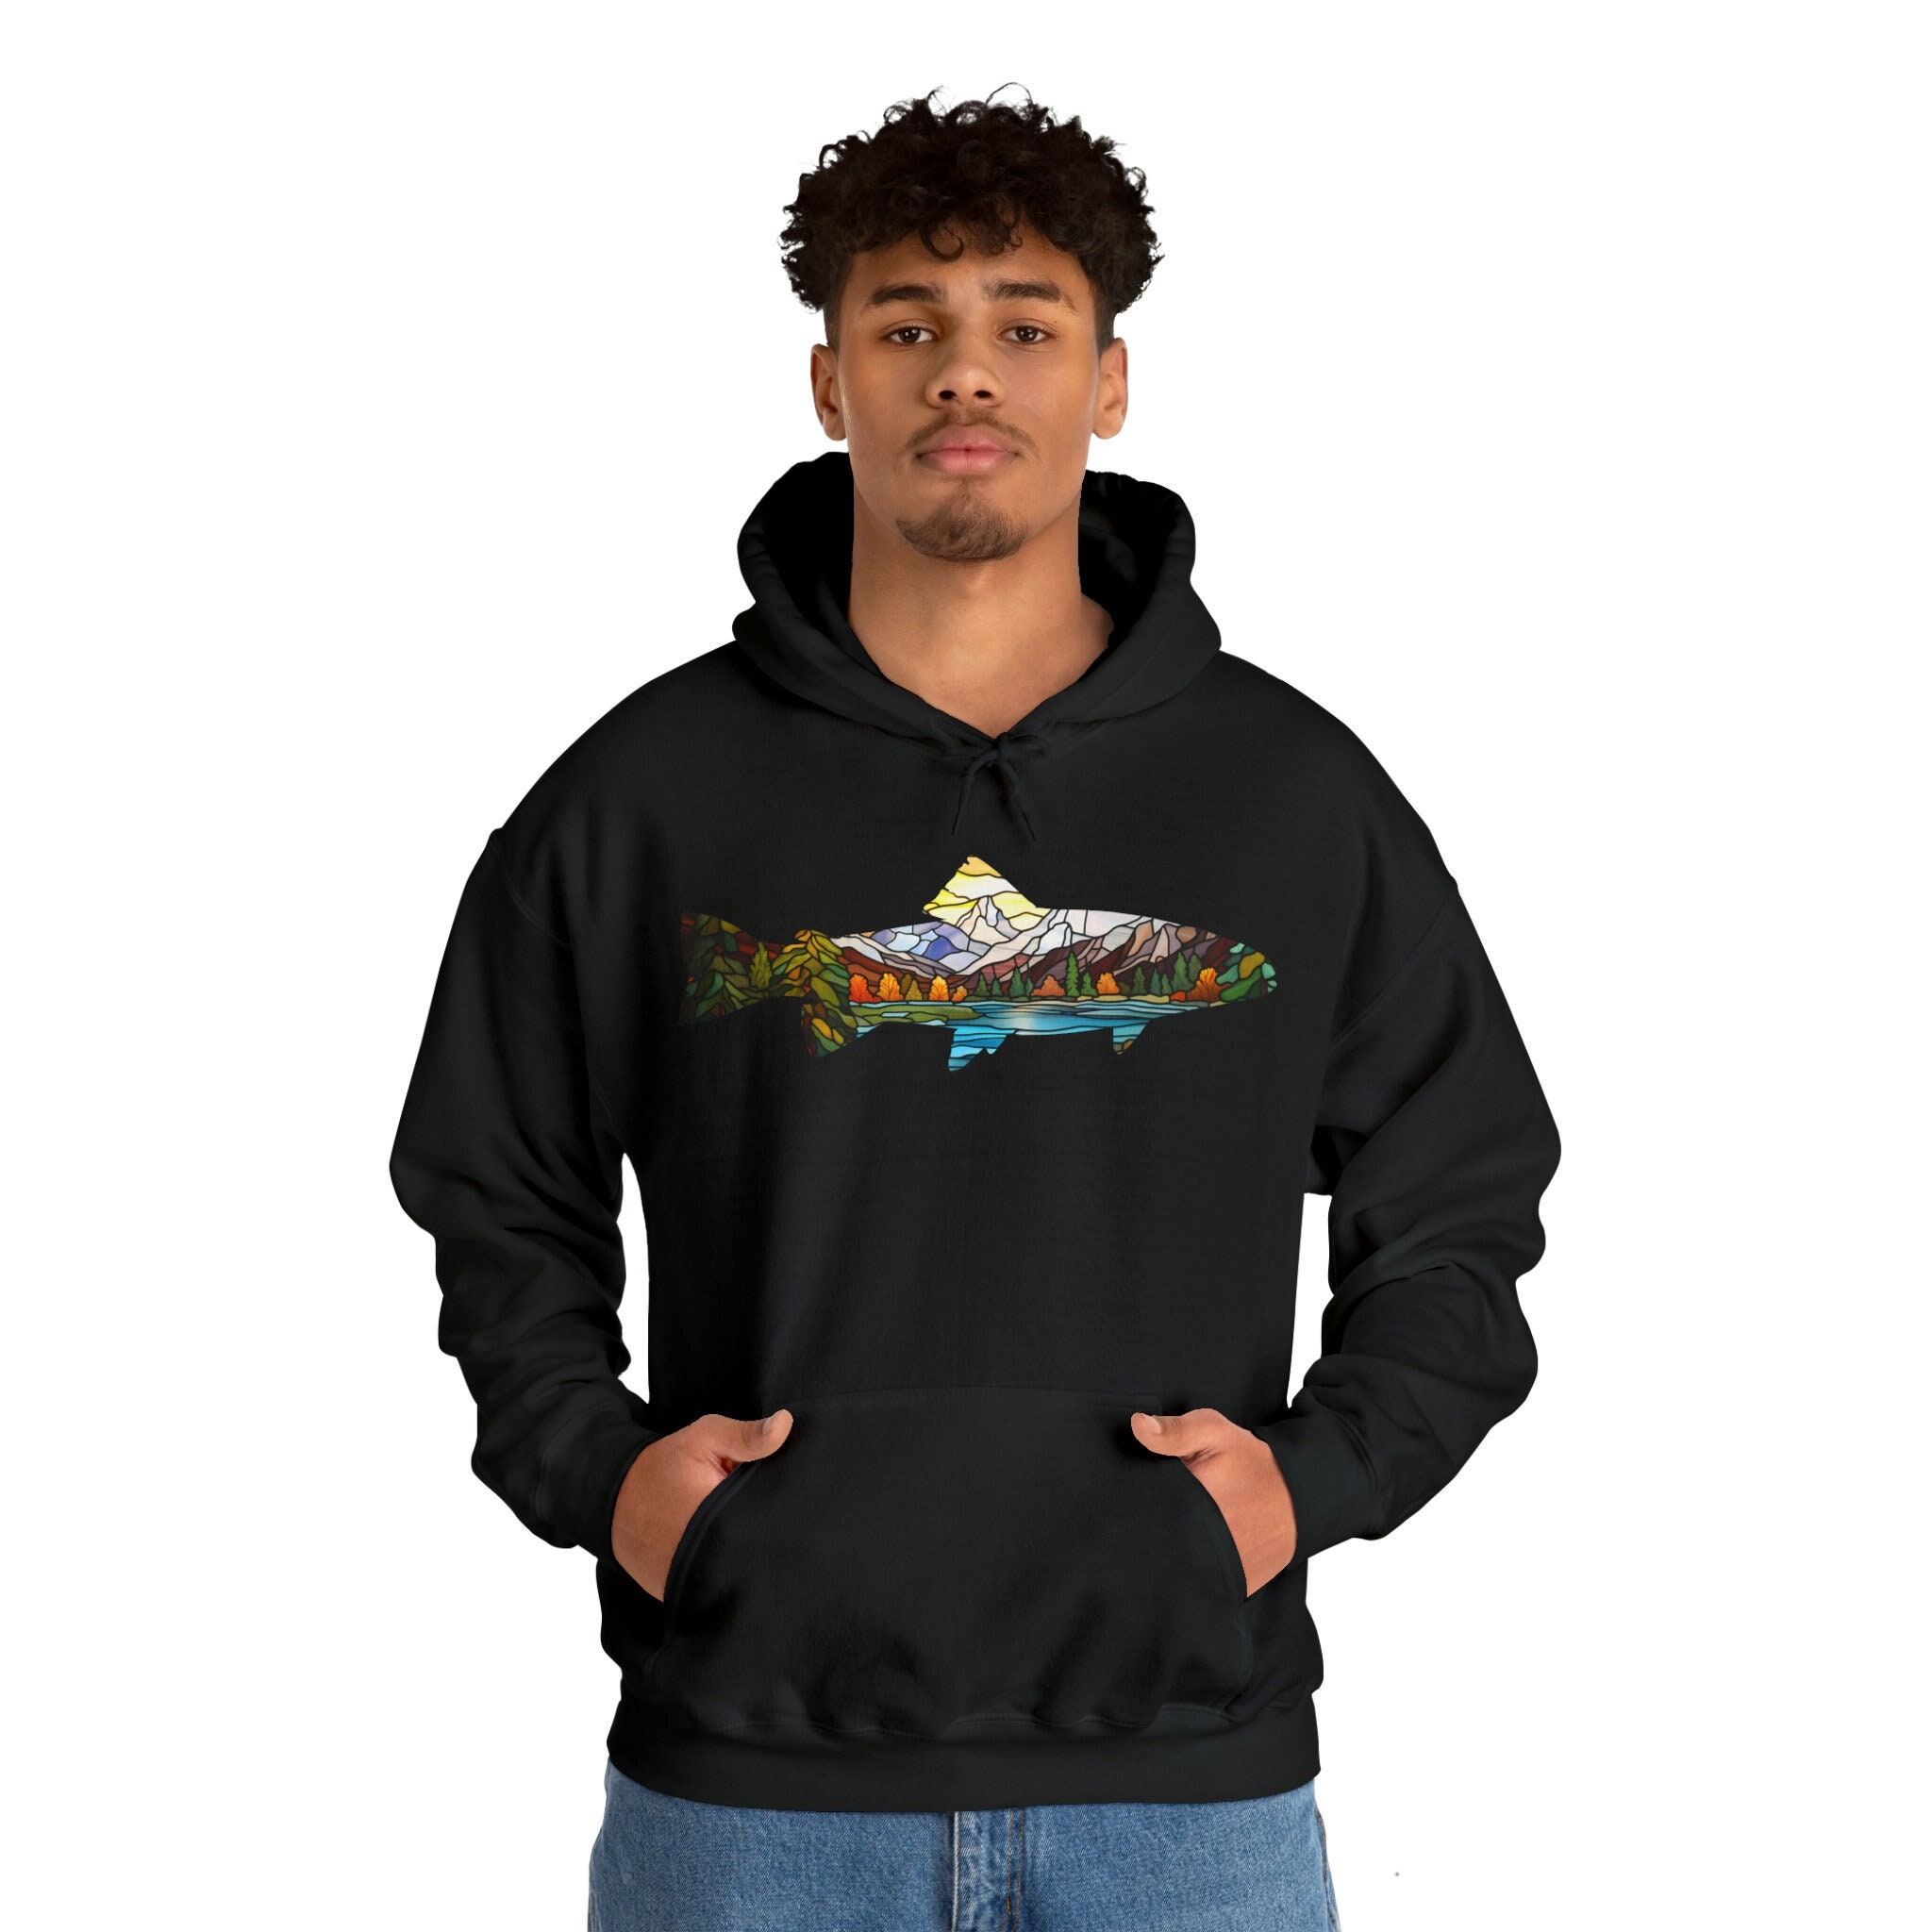 Fly Fishing Sweatshirt 90s Funny Fish Cartoon Sweater Match the